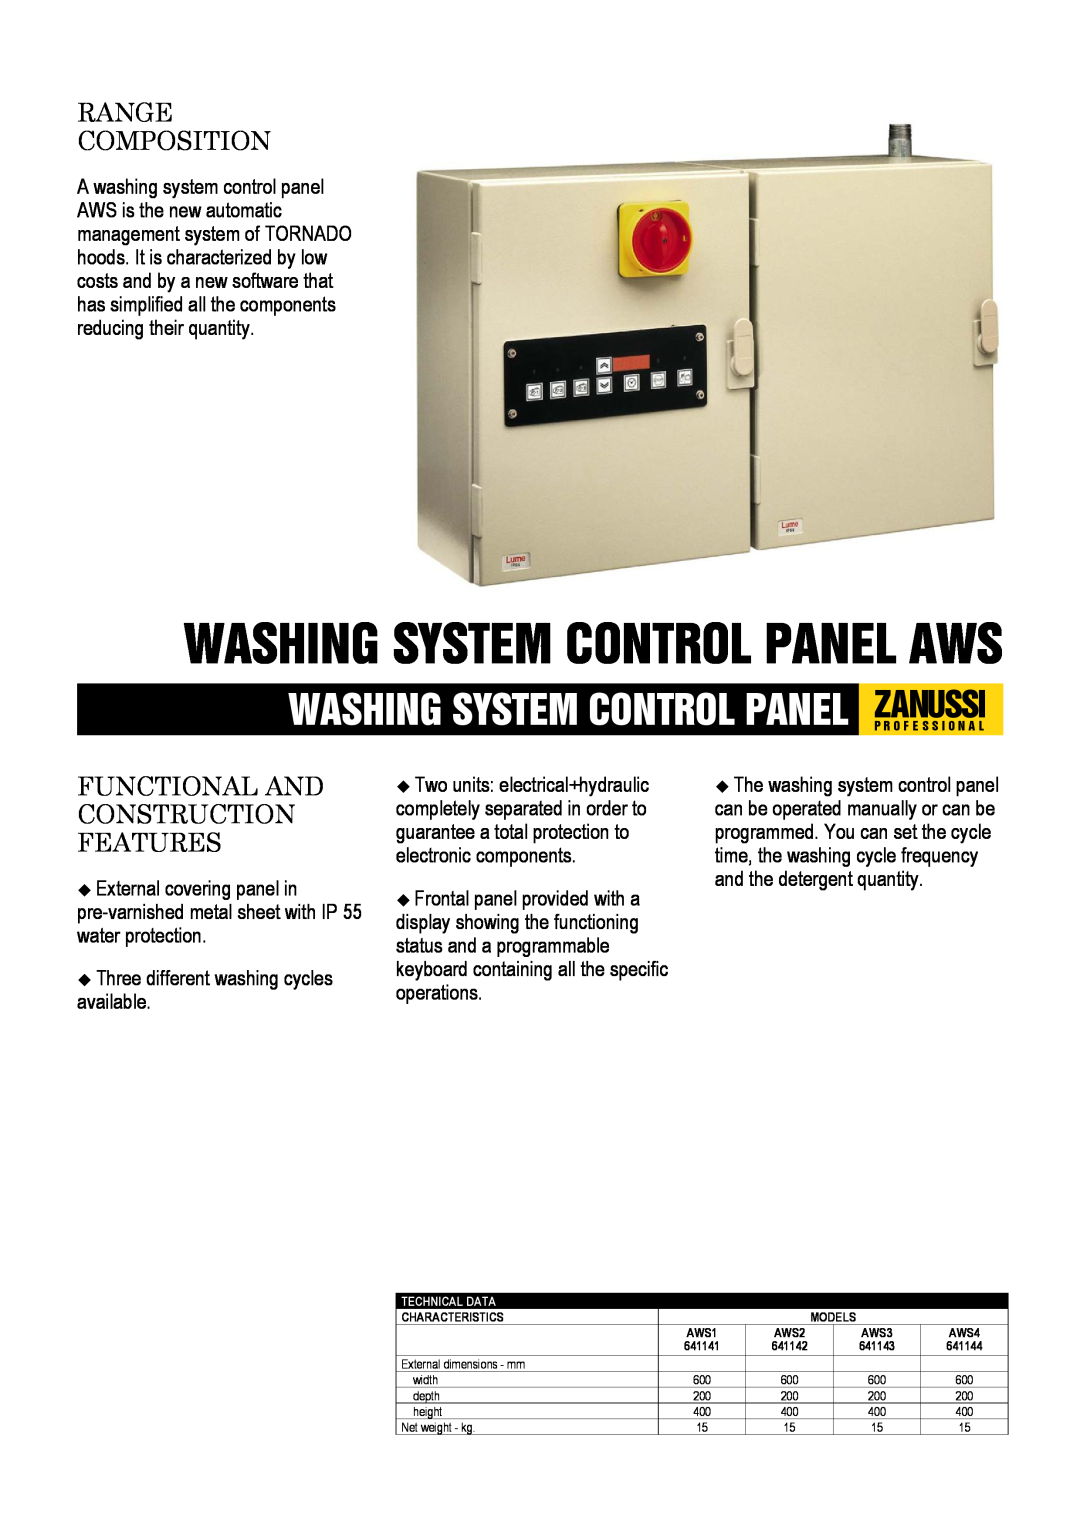 Zanussi AWS1 dimensions Washing System Control Panel Aws, Washing System Control Panel Zanussip R O F E S S I O N A L 